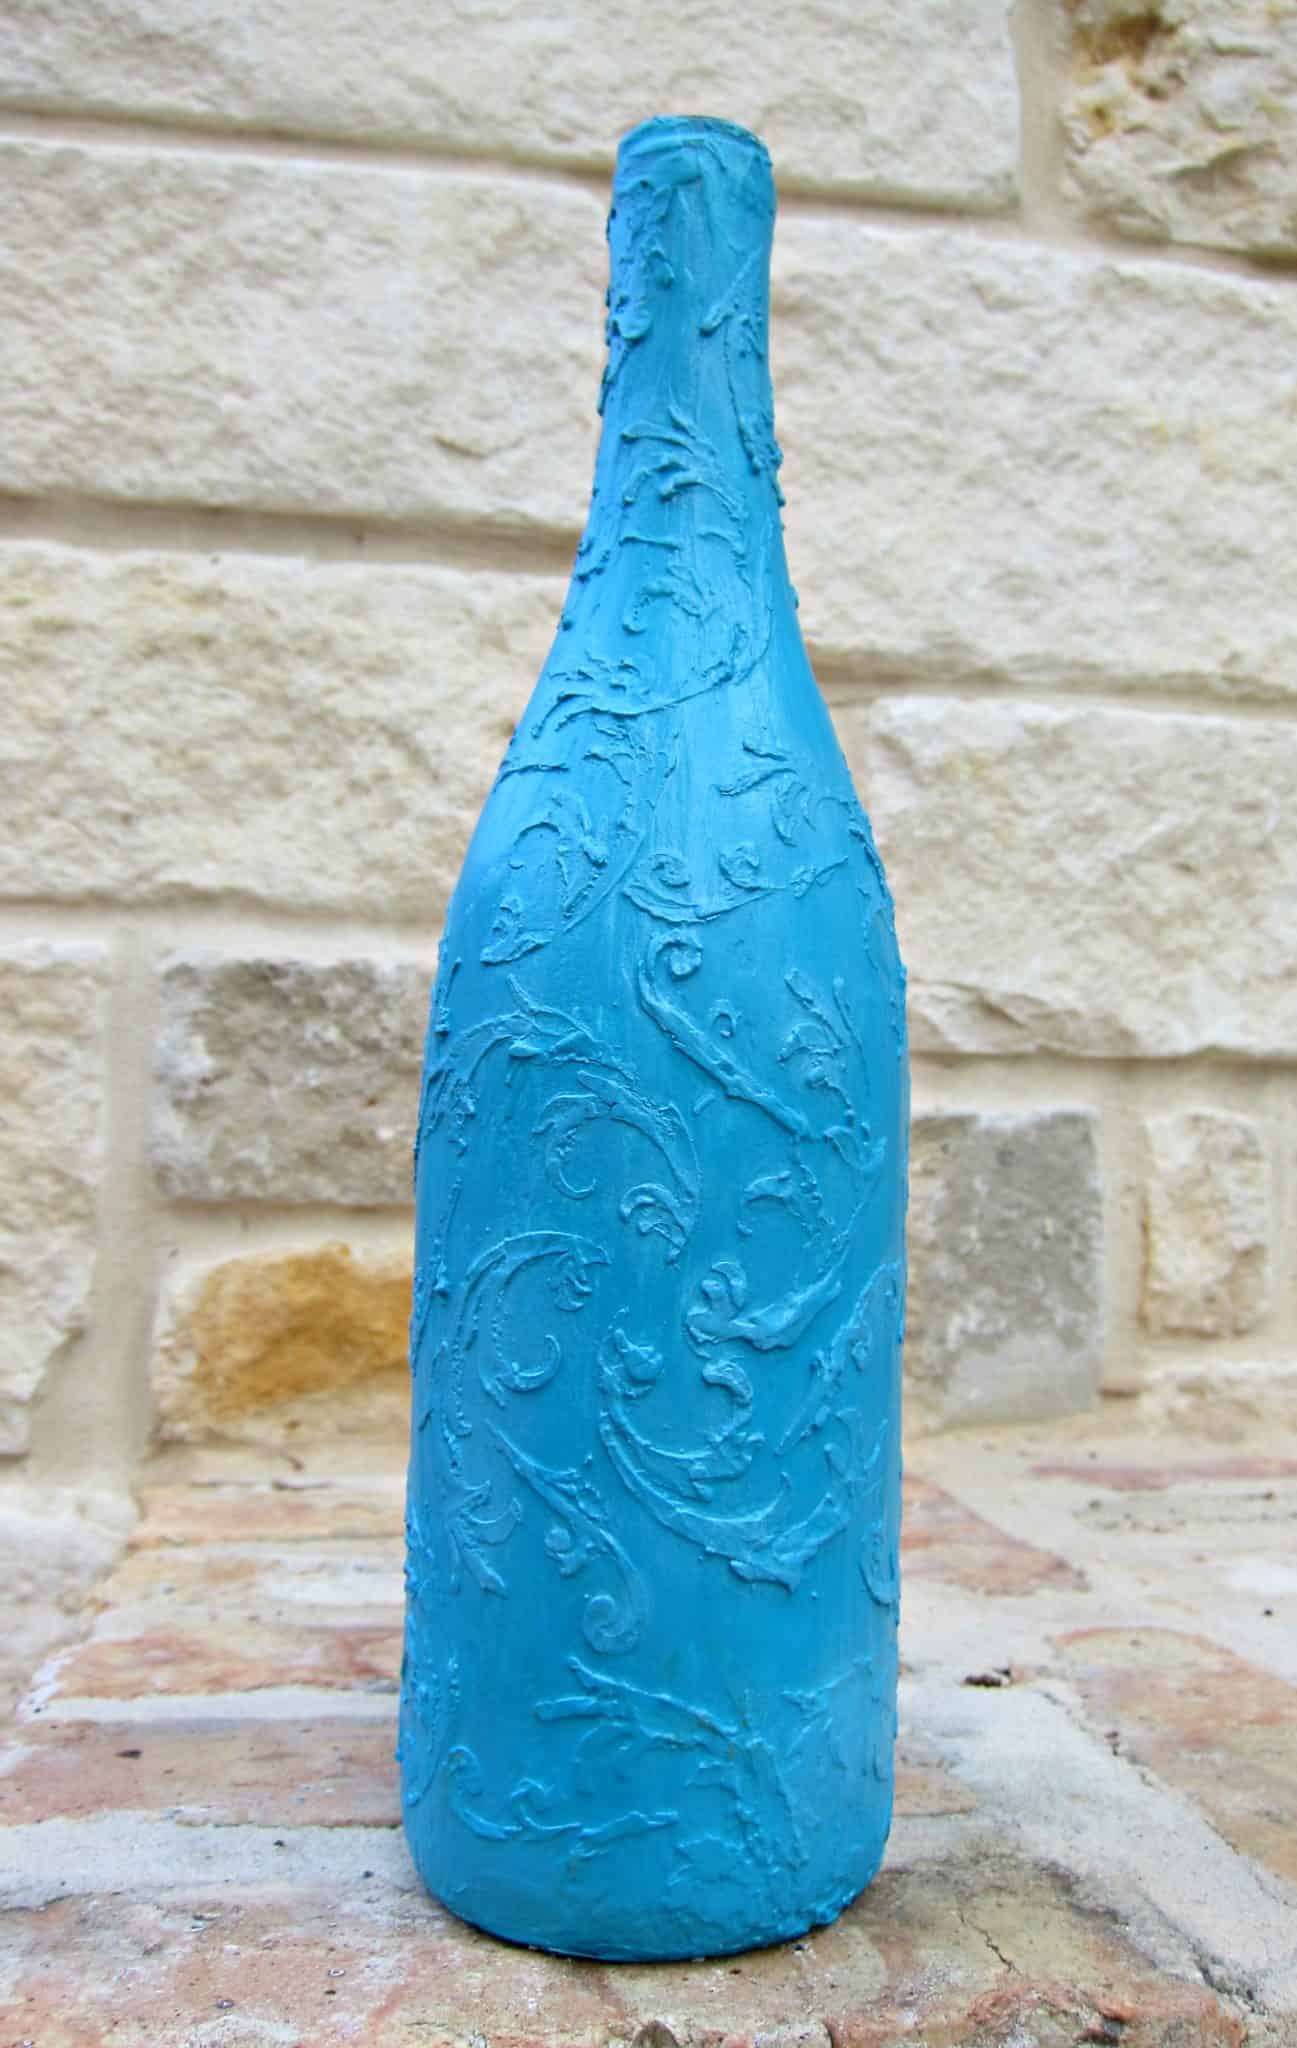 Faux ceramic wine bottles